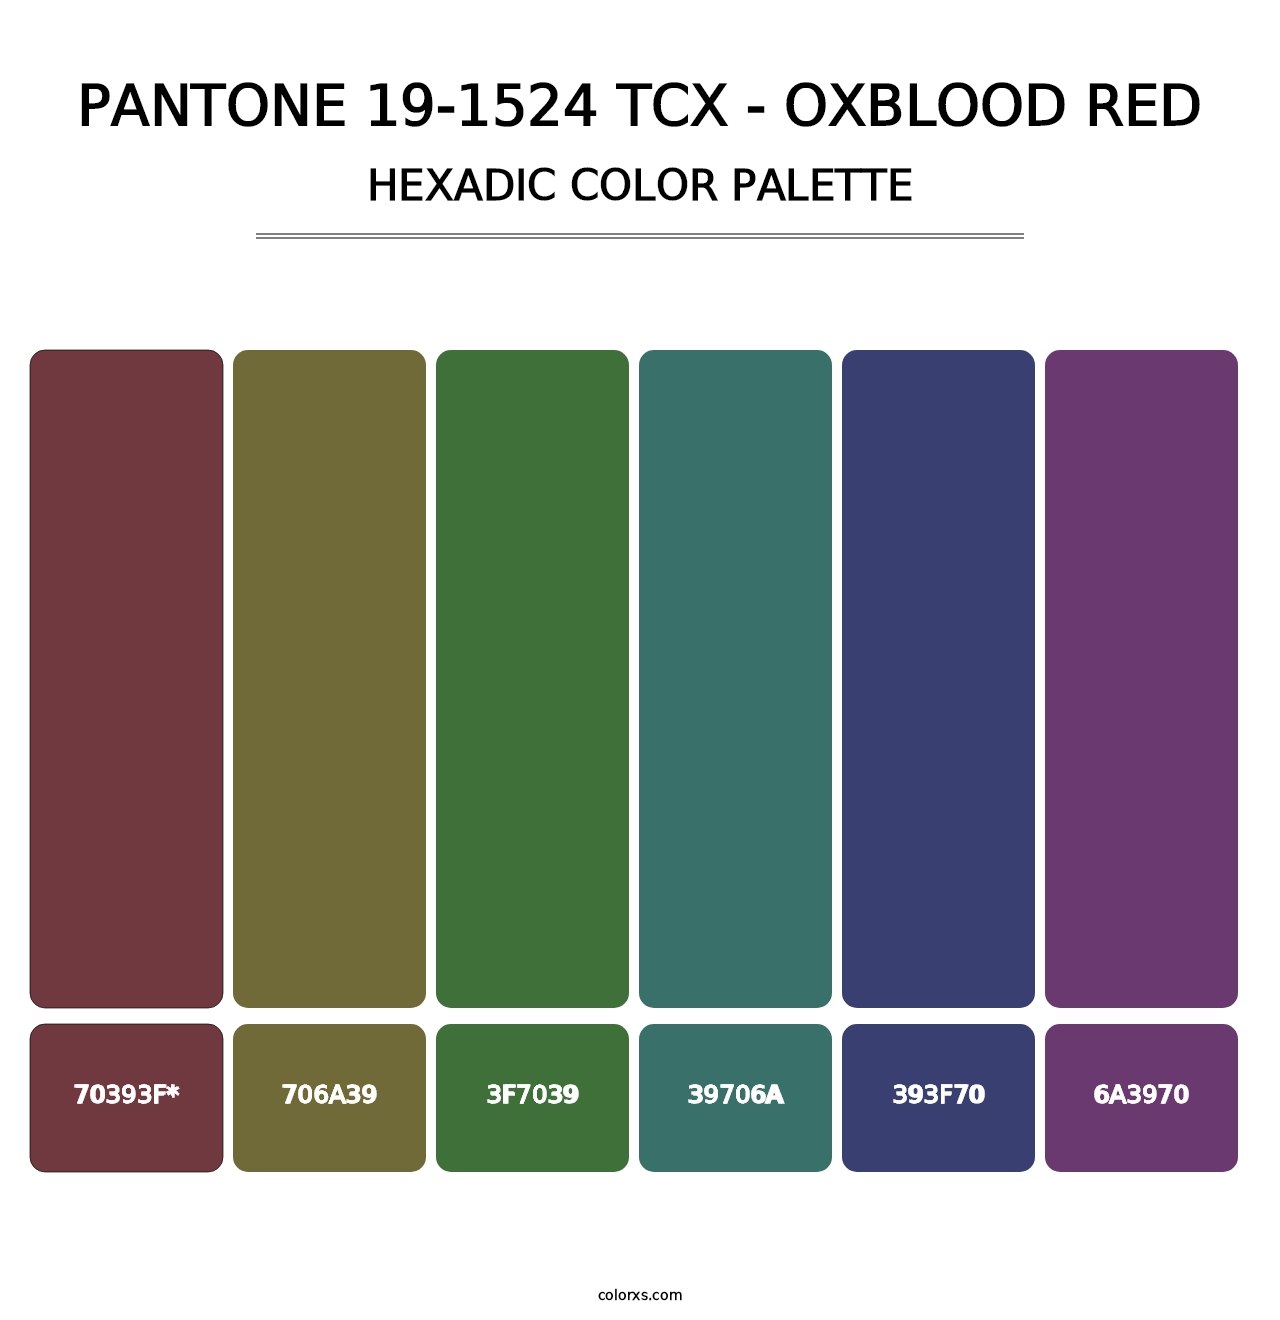 PANTONE 19-1524 TCX - Oxblood Red - Hexadic Color Palette